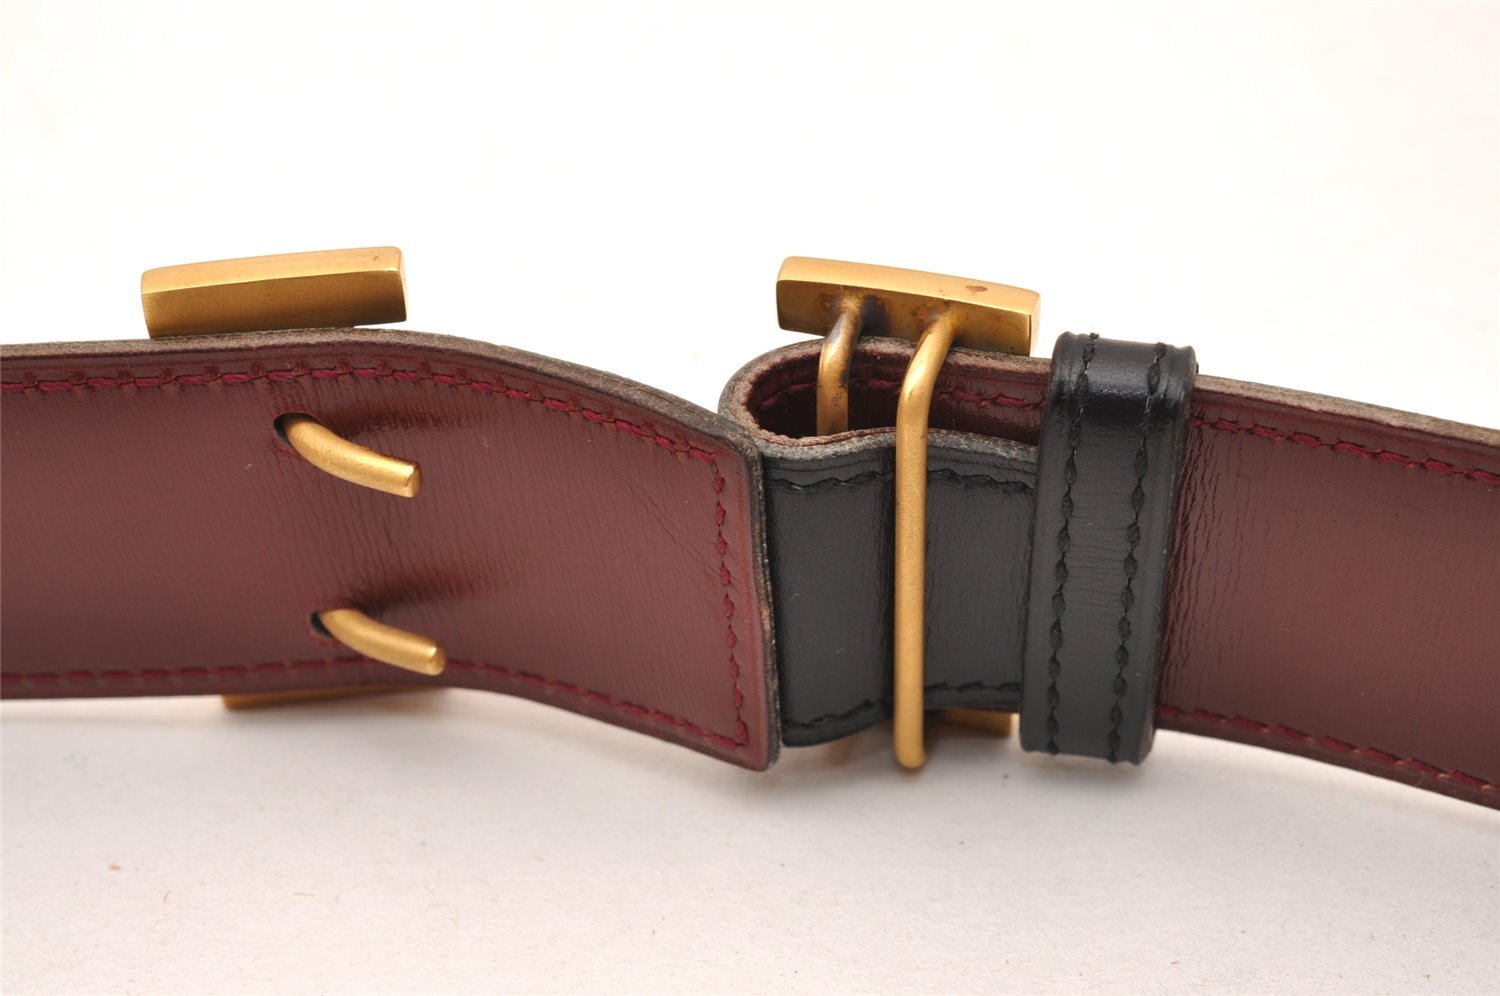 Authentic HERMES Vintage Constance Leather Belt 39.4